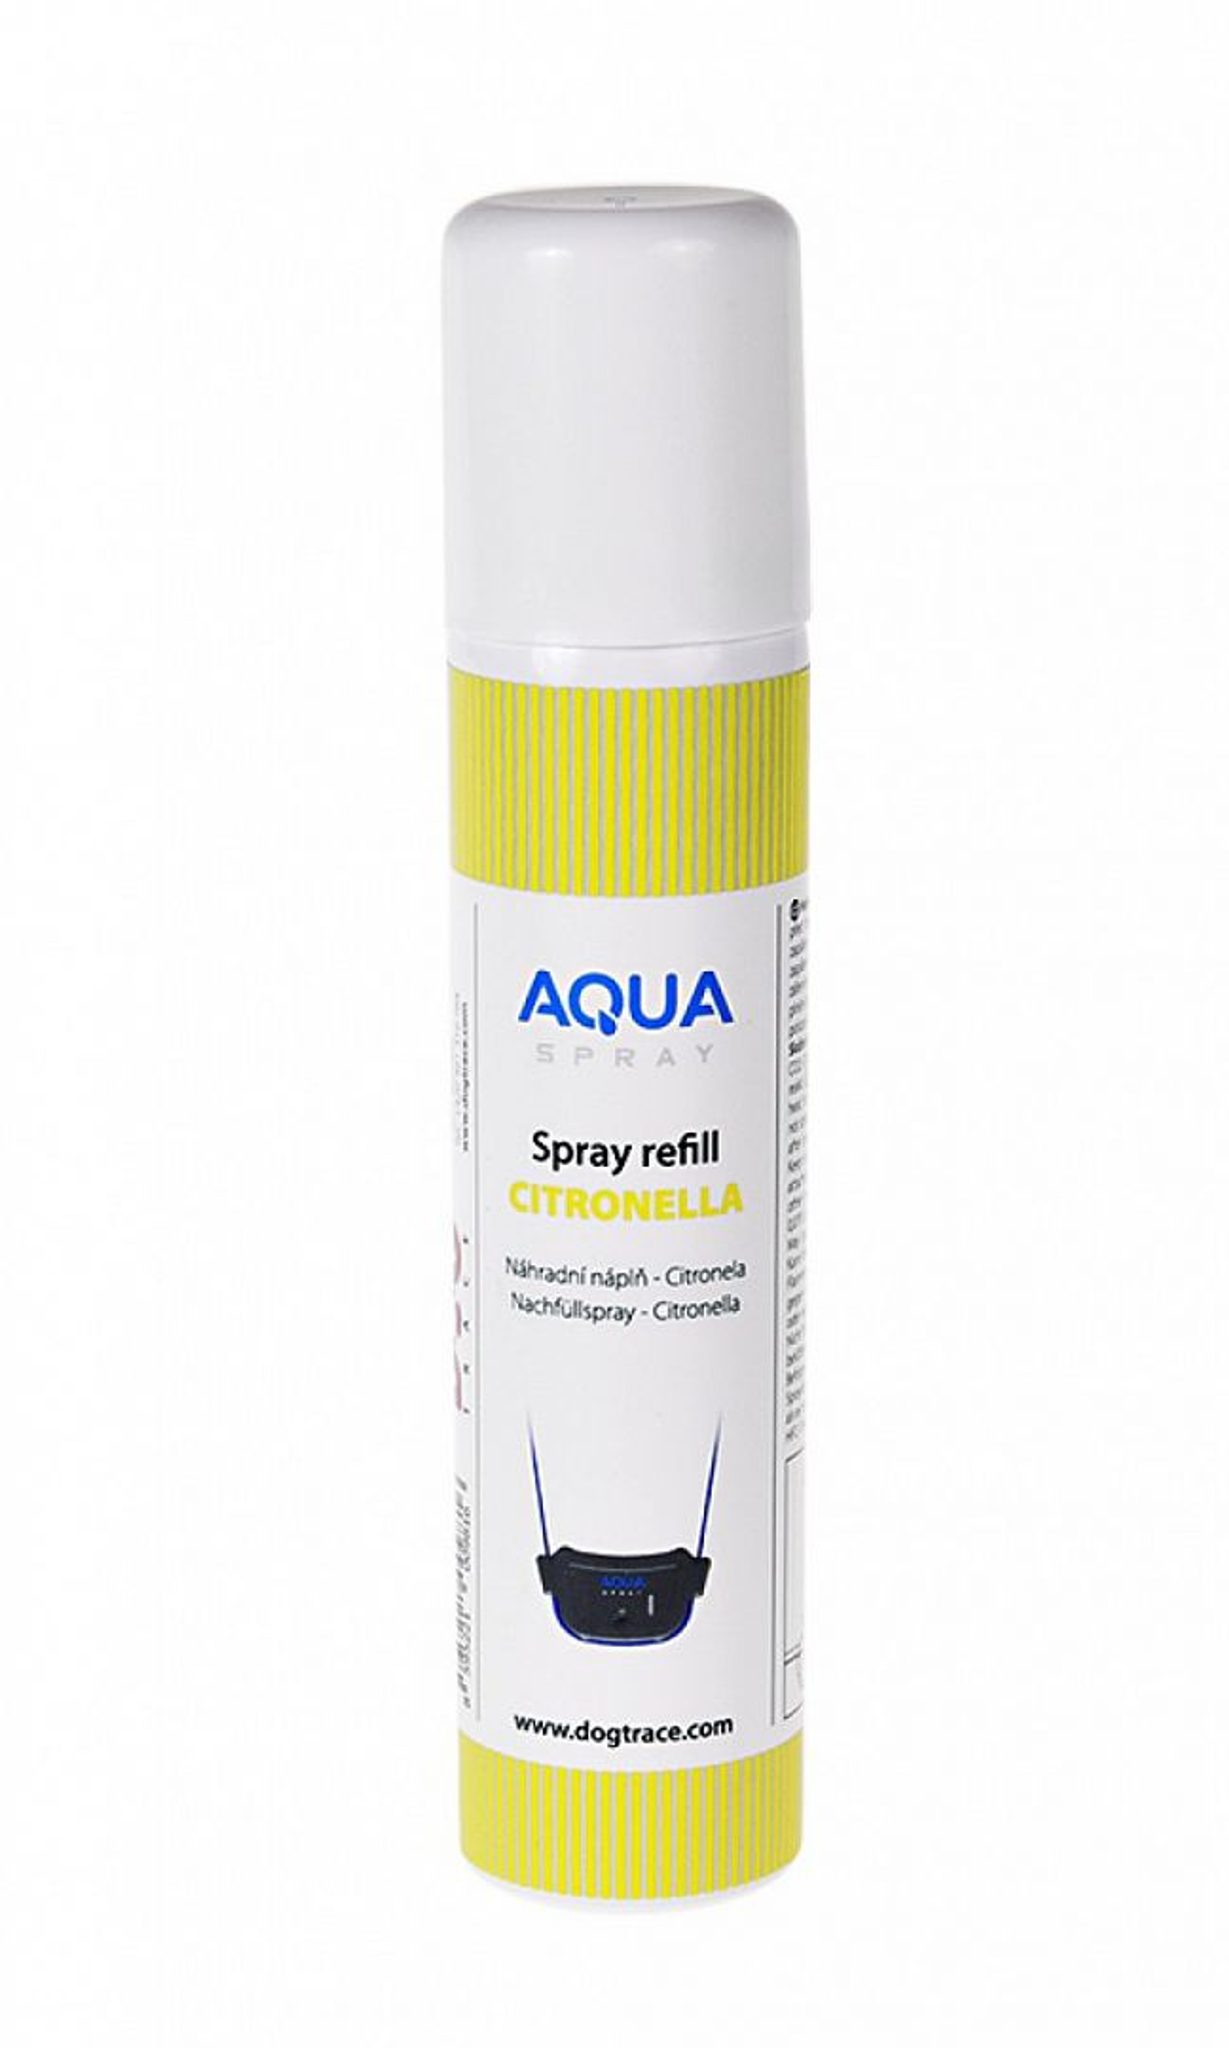 Dogtrace d-control 900 AQUA spray